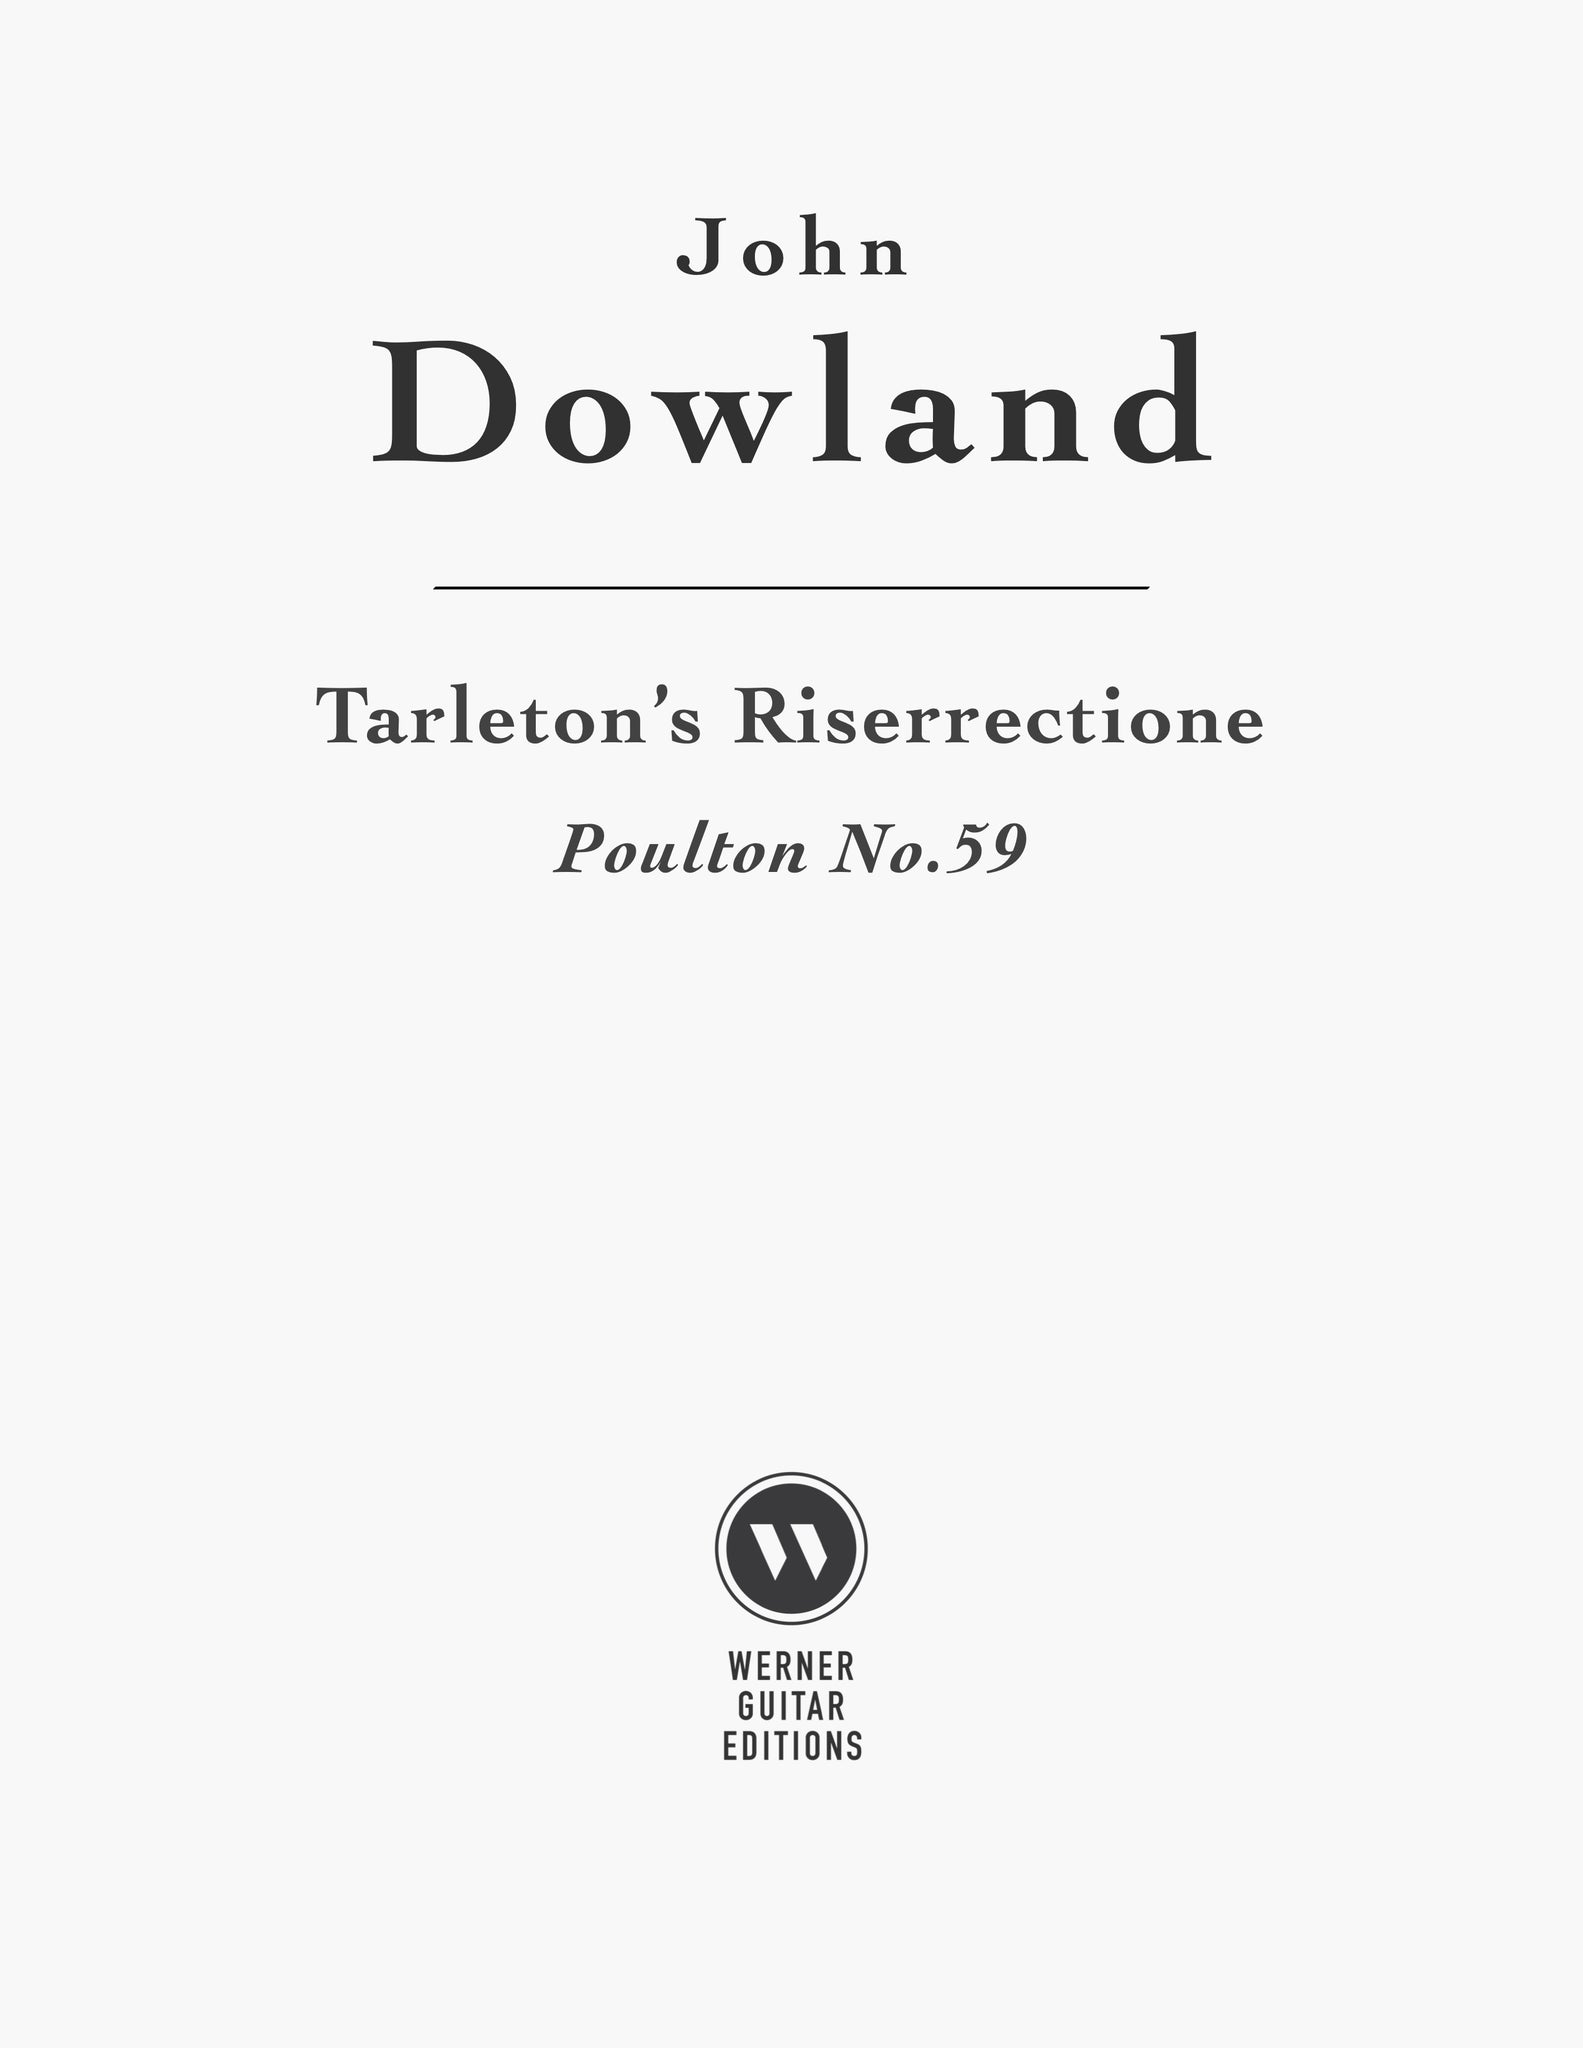 Tarleton's Riserrectione by Dowland (PDF Sheet Music and TAB)